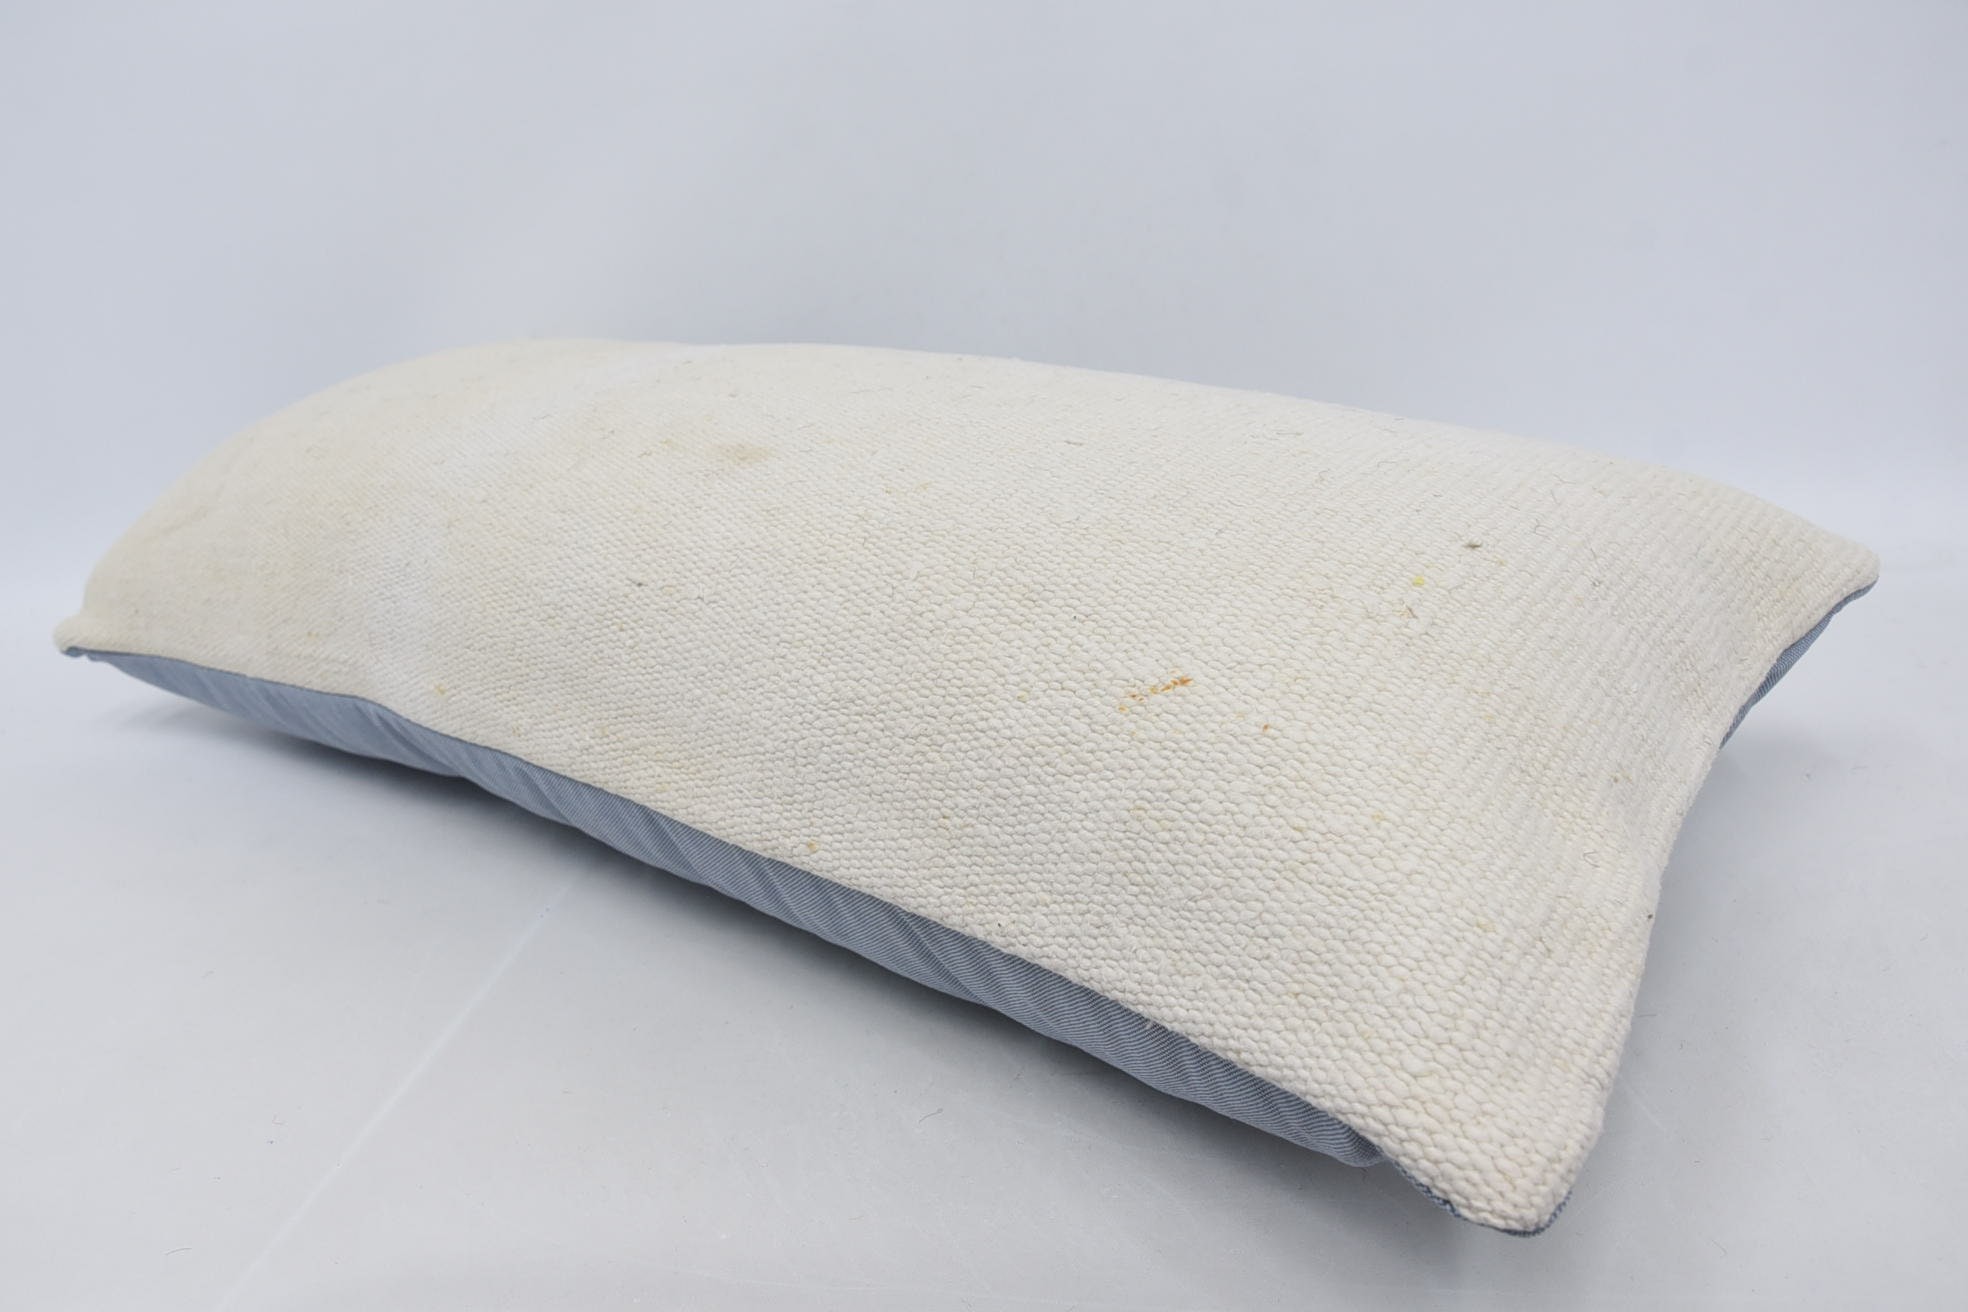 Boho Pillow, Farmhouse Pillow Sham, Boho Pillow Sham Cover, Decorative Throw Pillow Case, Pillow for Sofa, 16"x36" White Pillow Case